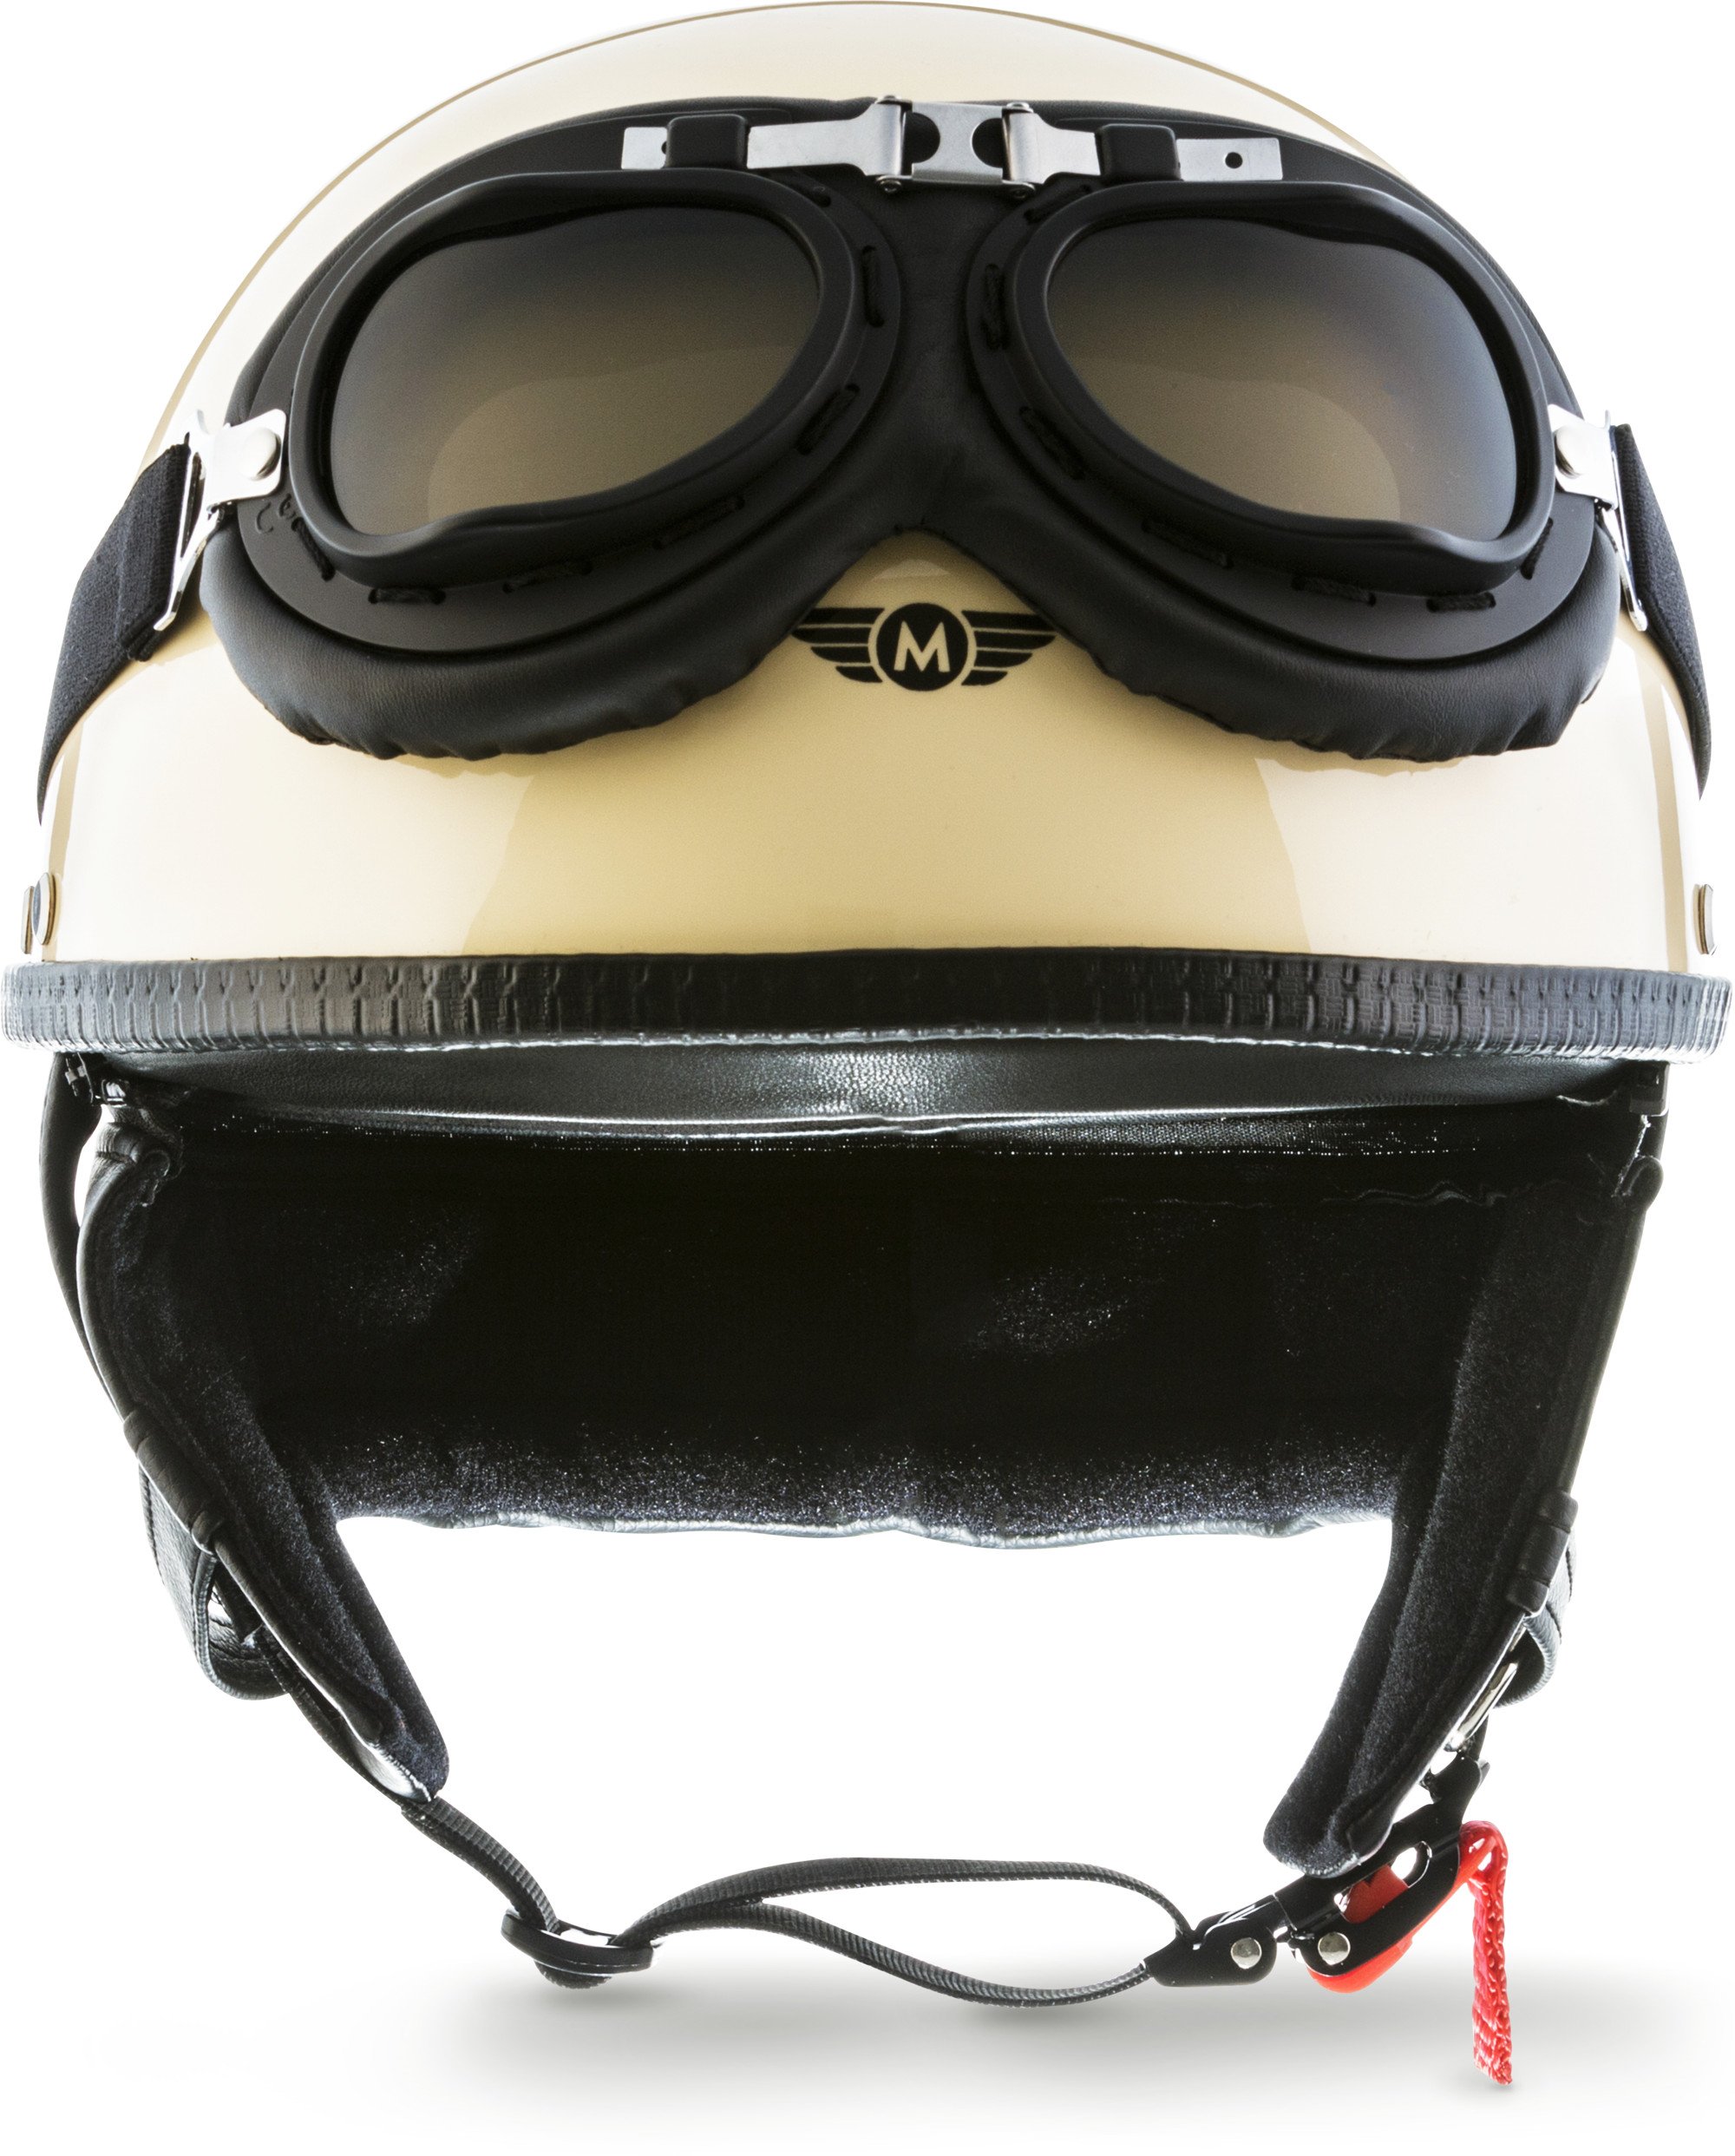 Moto Helmets® D22-Set „Creme“ · Brain-Cap · Halbschale Jet-Helm Motorrad-Helm Roller-Helm Scooter-Helm Bobber Mofa-Helm Chopper Retro Cruiser Vintage Pilot Biker Helmet Brille Visier · XL (61-62cm)